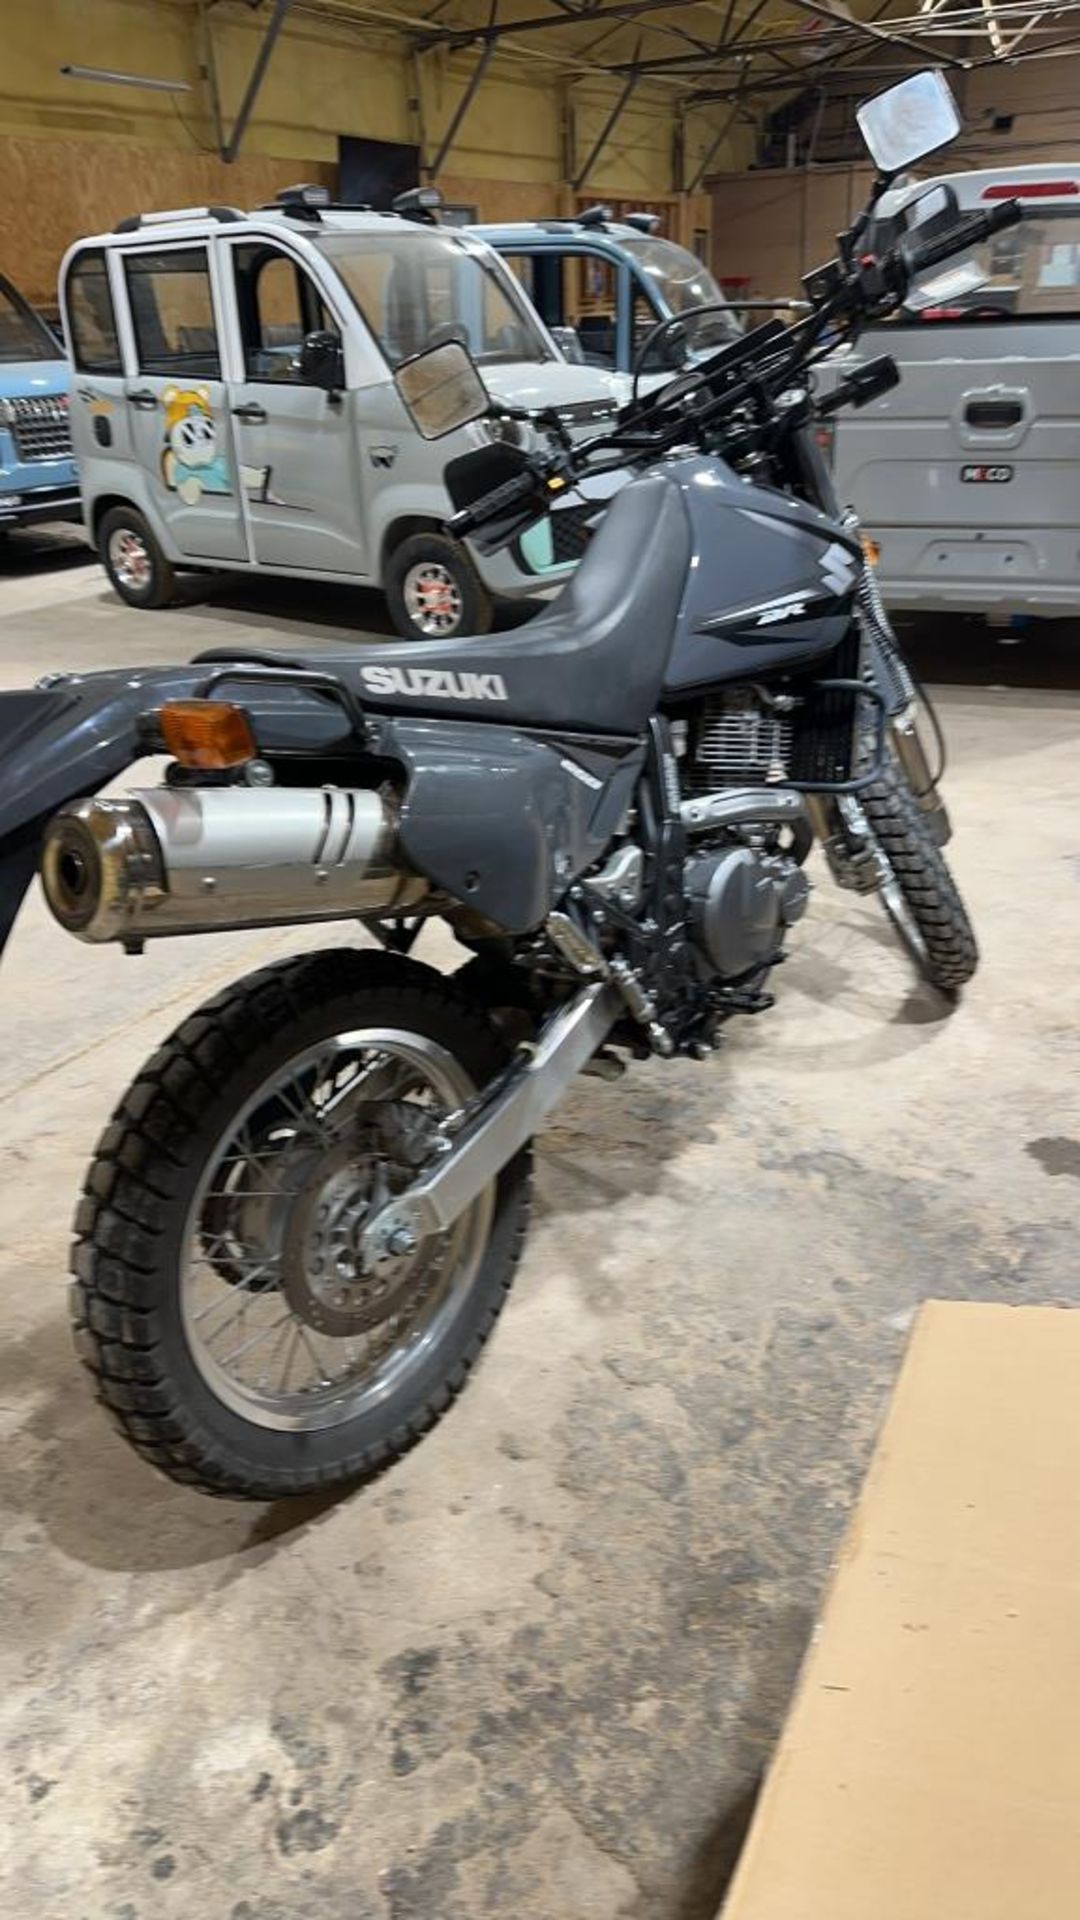 2012 Suzuki DR650S motorcycle - Image 10 of 27